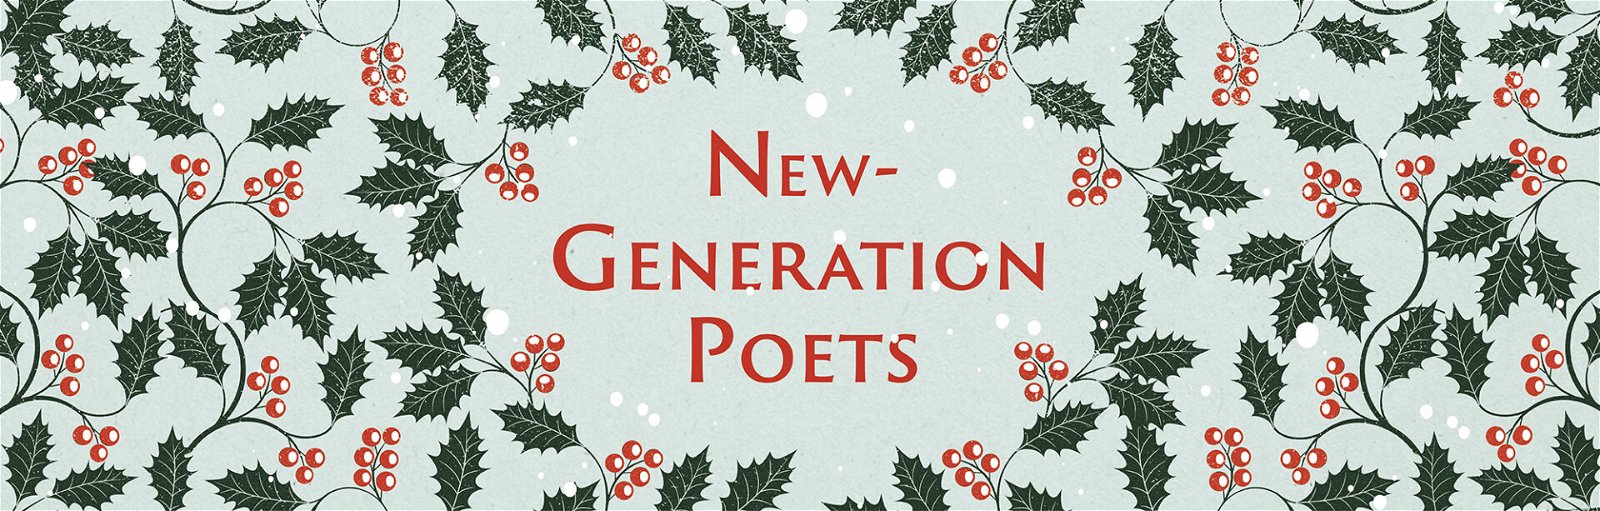 https://static.faber.co.uk/wp-content/uploads/2021/11/New-Generation-Poets-1920x613.jpg